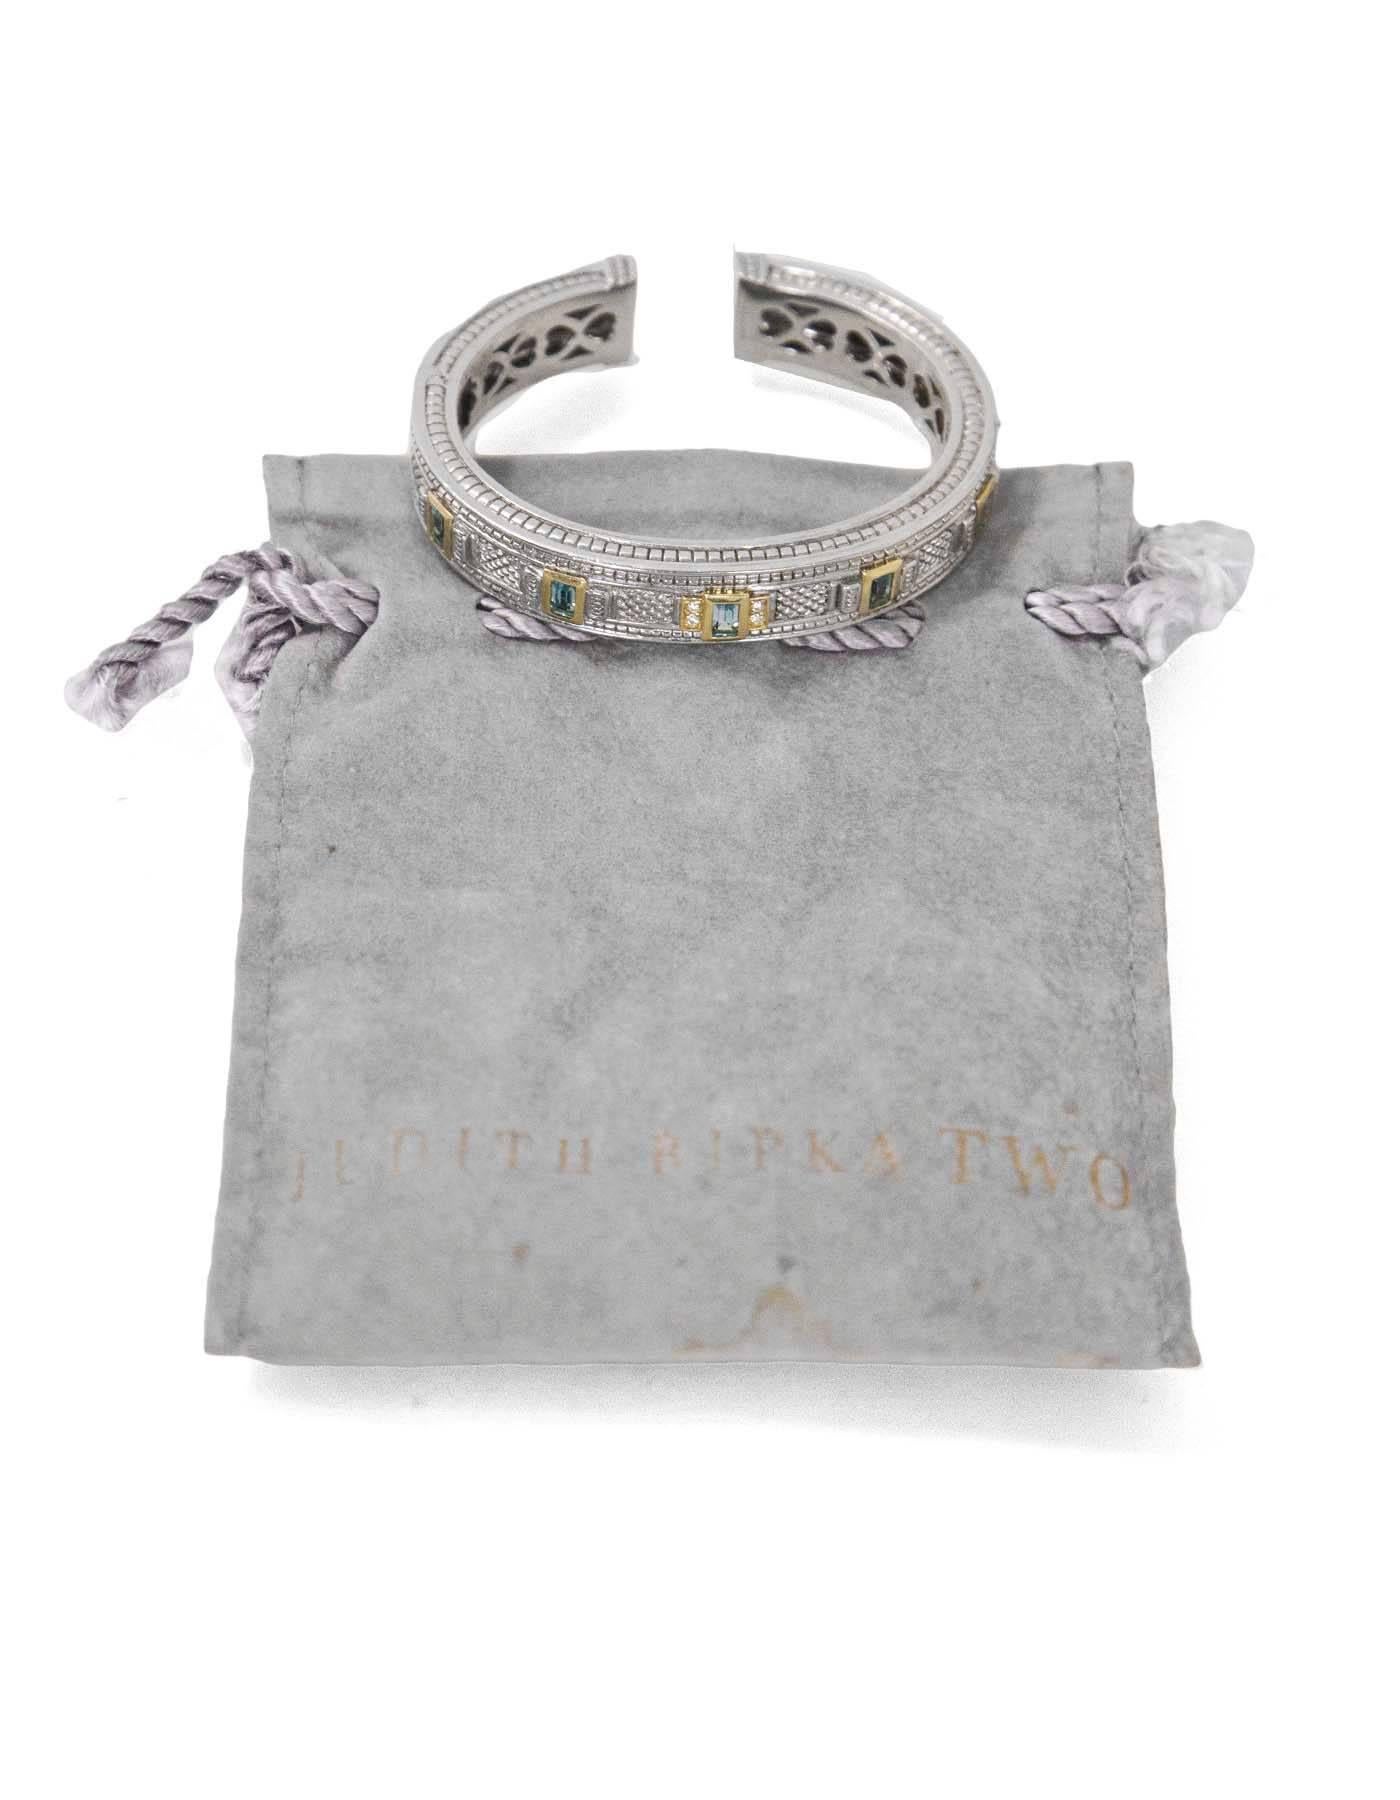 Judith Ripka Sterling & Gold Kick Cuff Bracelet with Dust Bag 2